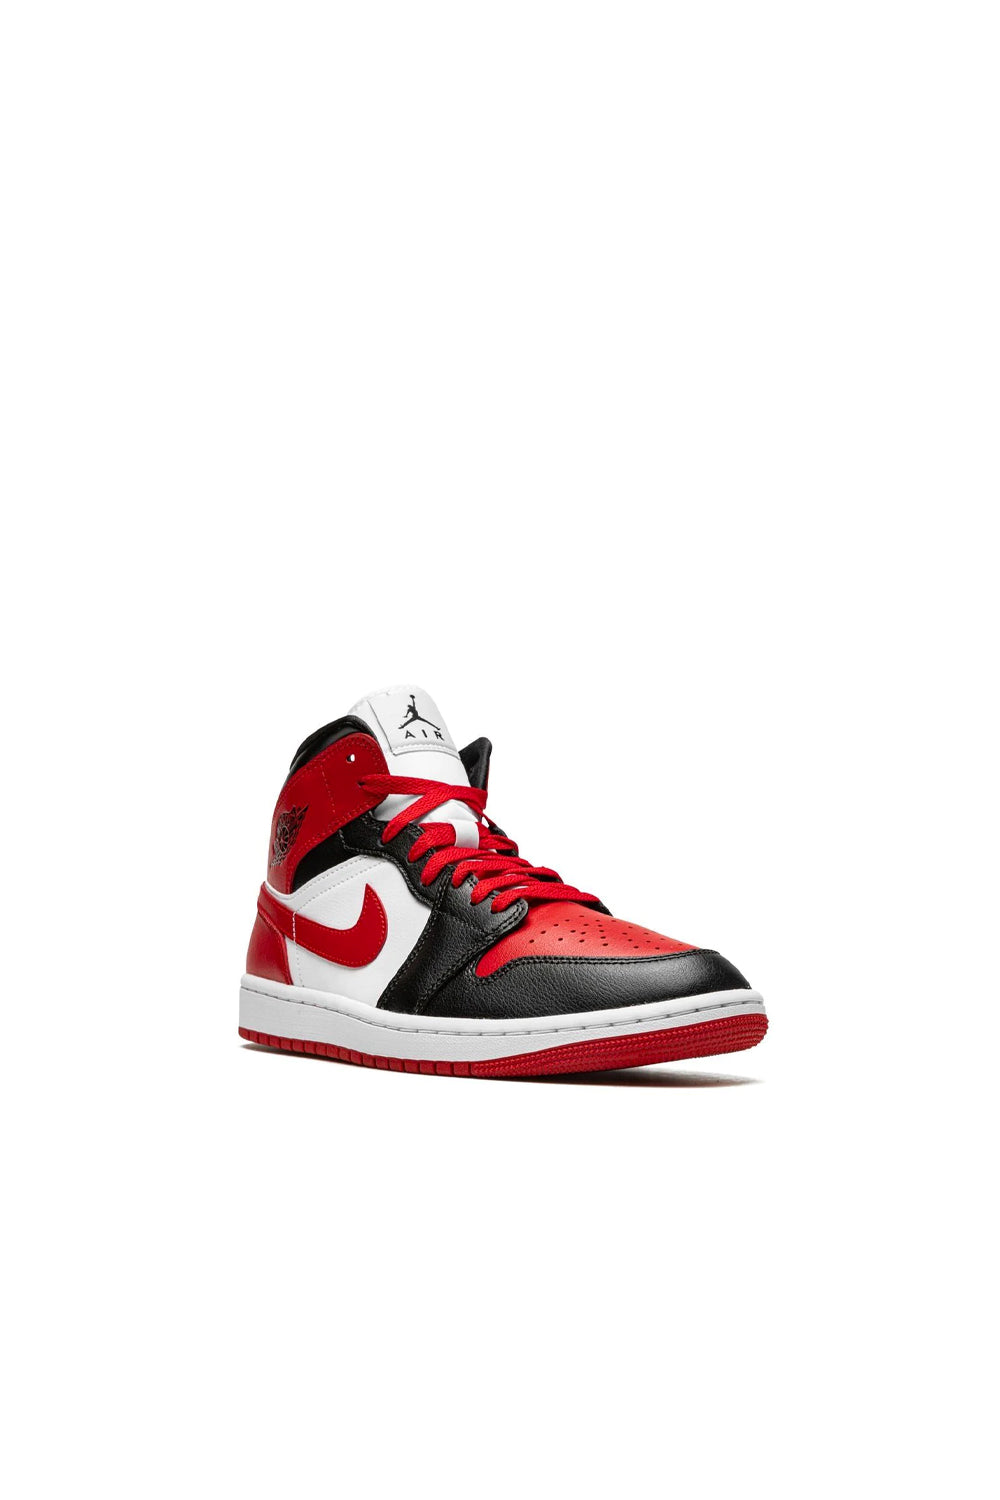 Nike Air Jordan 1 Mid sneakers